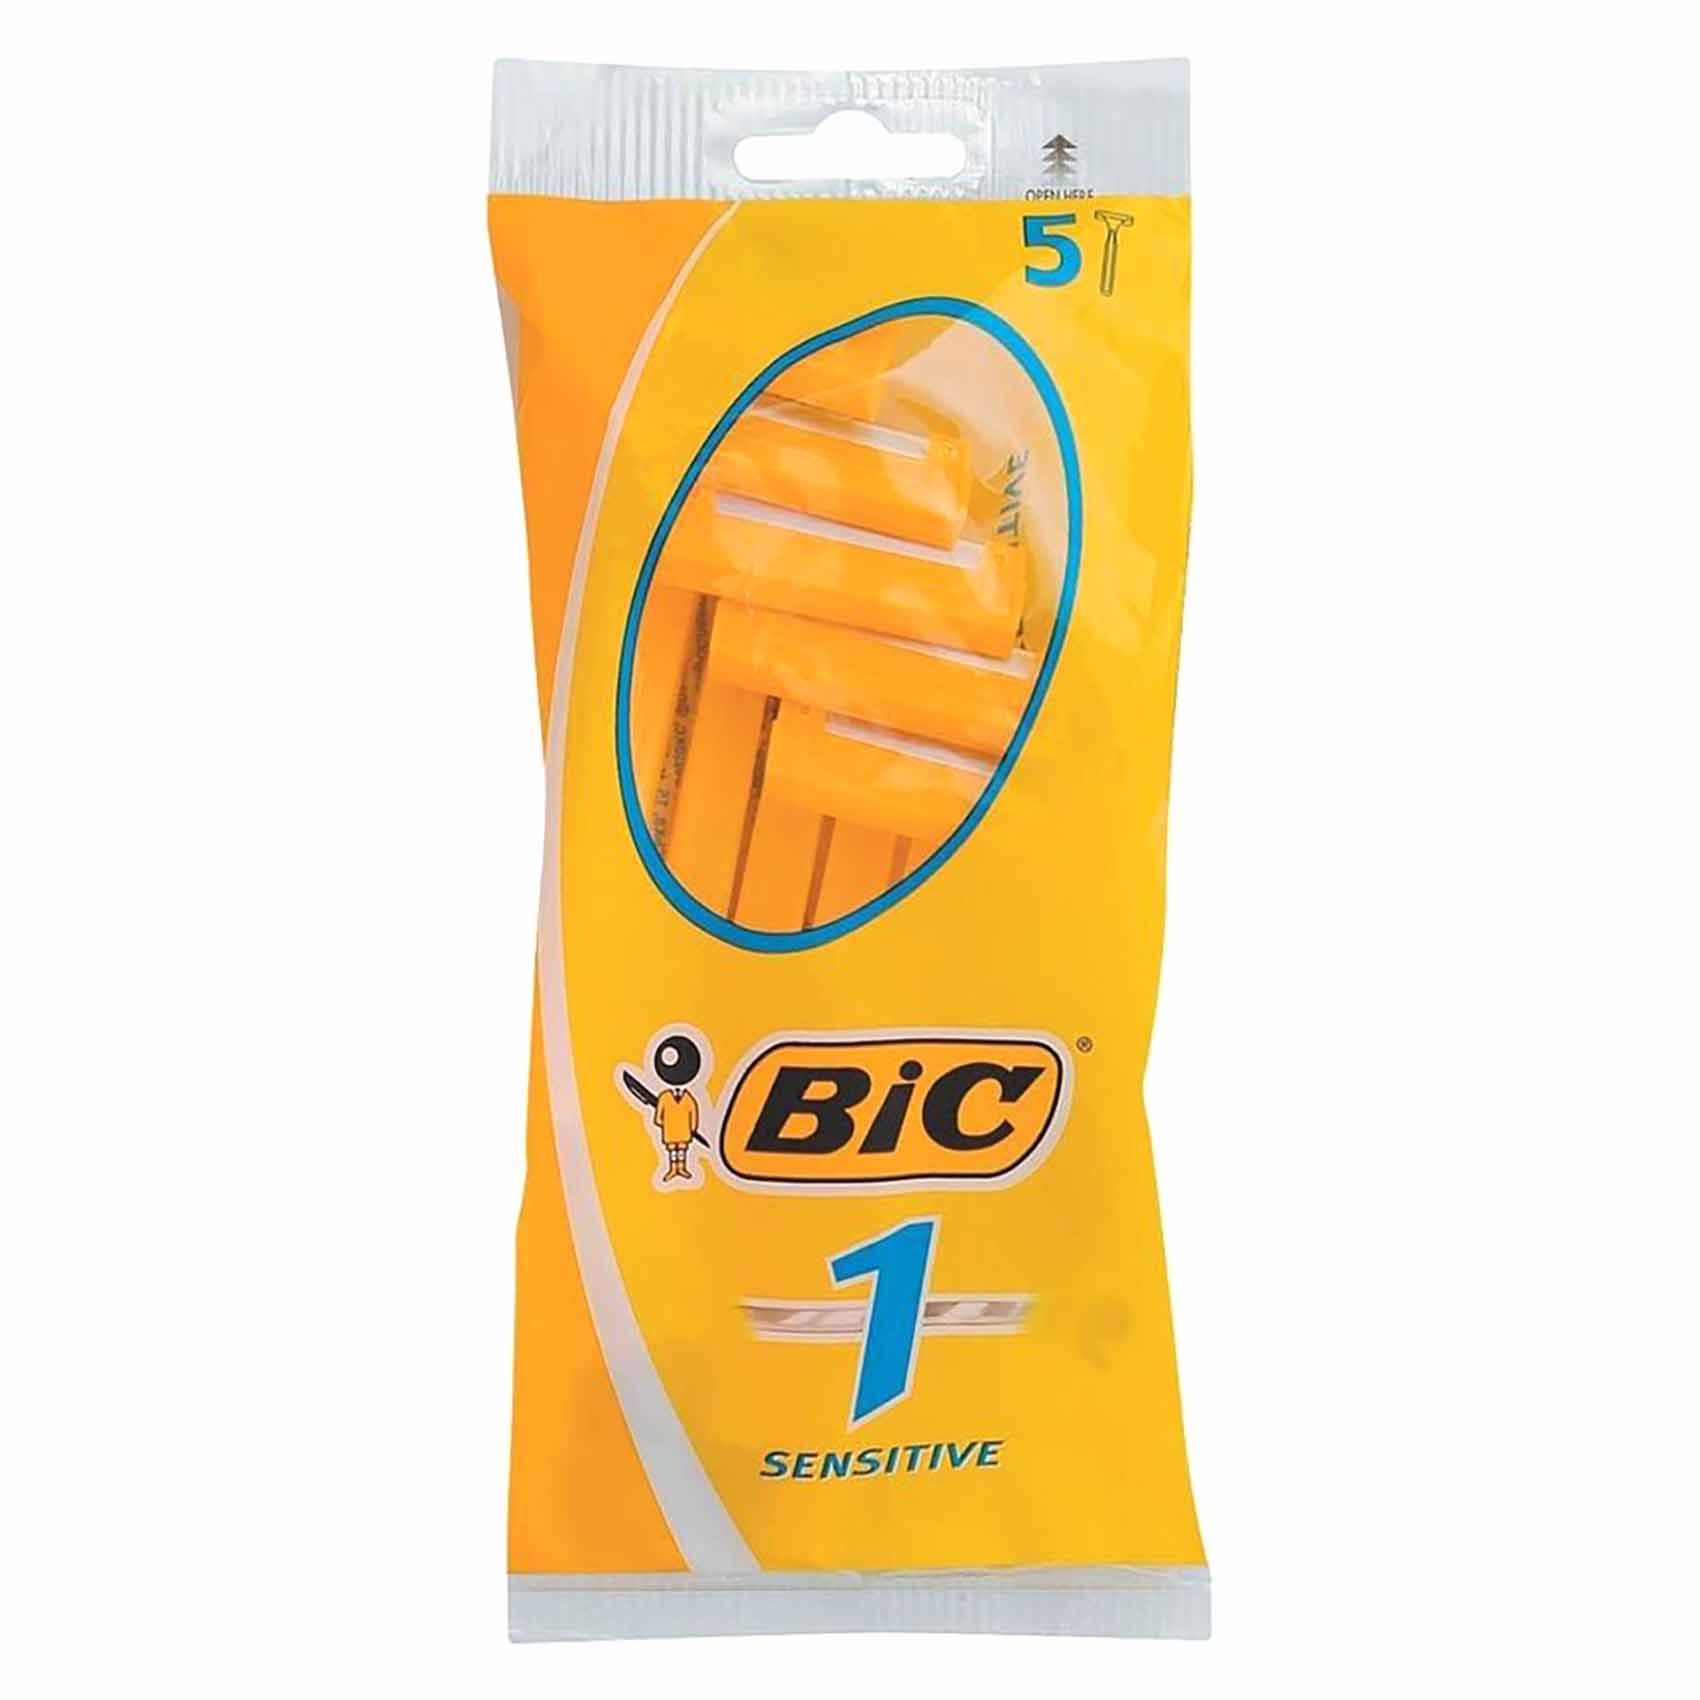 Bic 1 Sensitive Disposable Razors For Men 5 Pieces @ Special Price